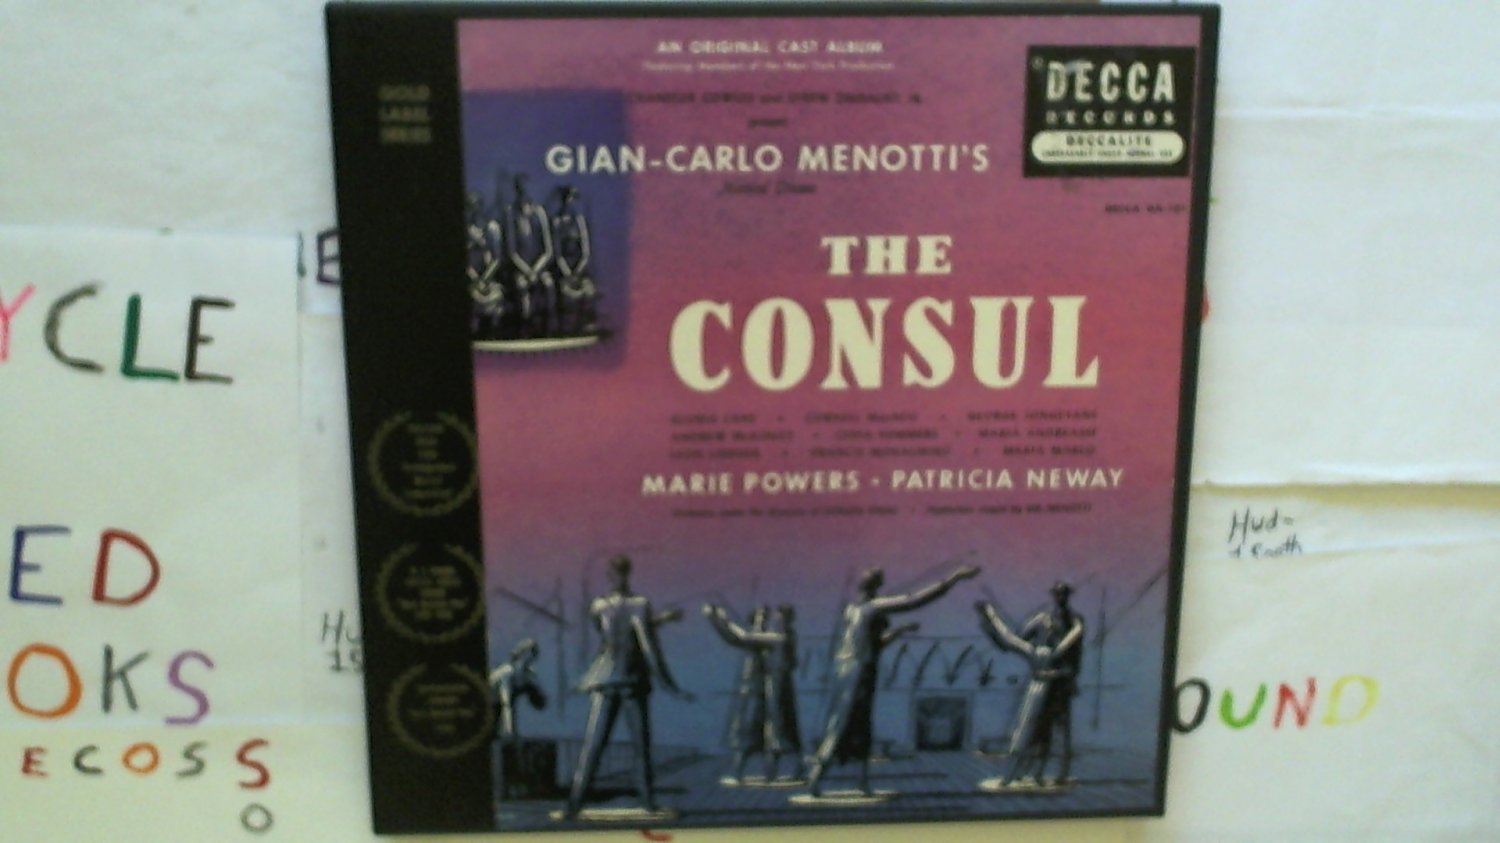 Gian-Carlo Menotti - The Consul Orch. Dir. Lehman Engel LP Vinyl Box Set On Decca (Used